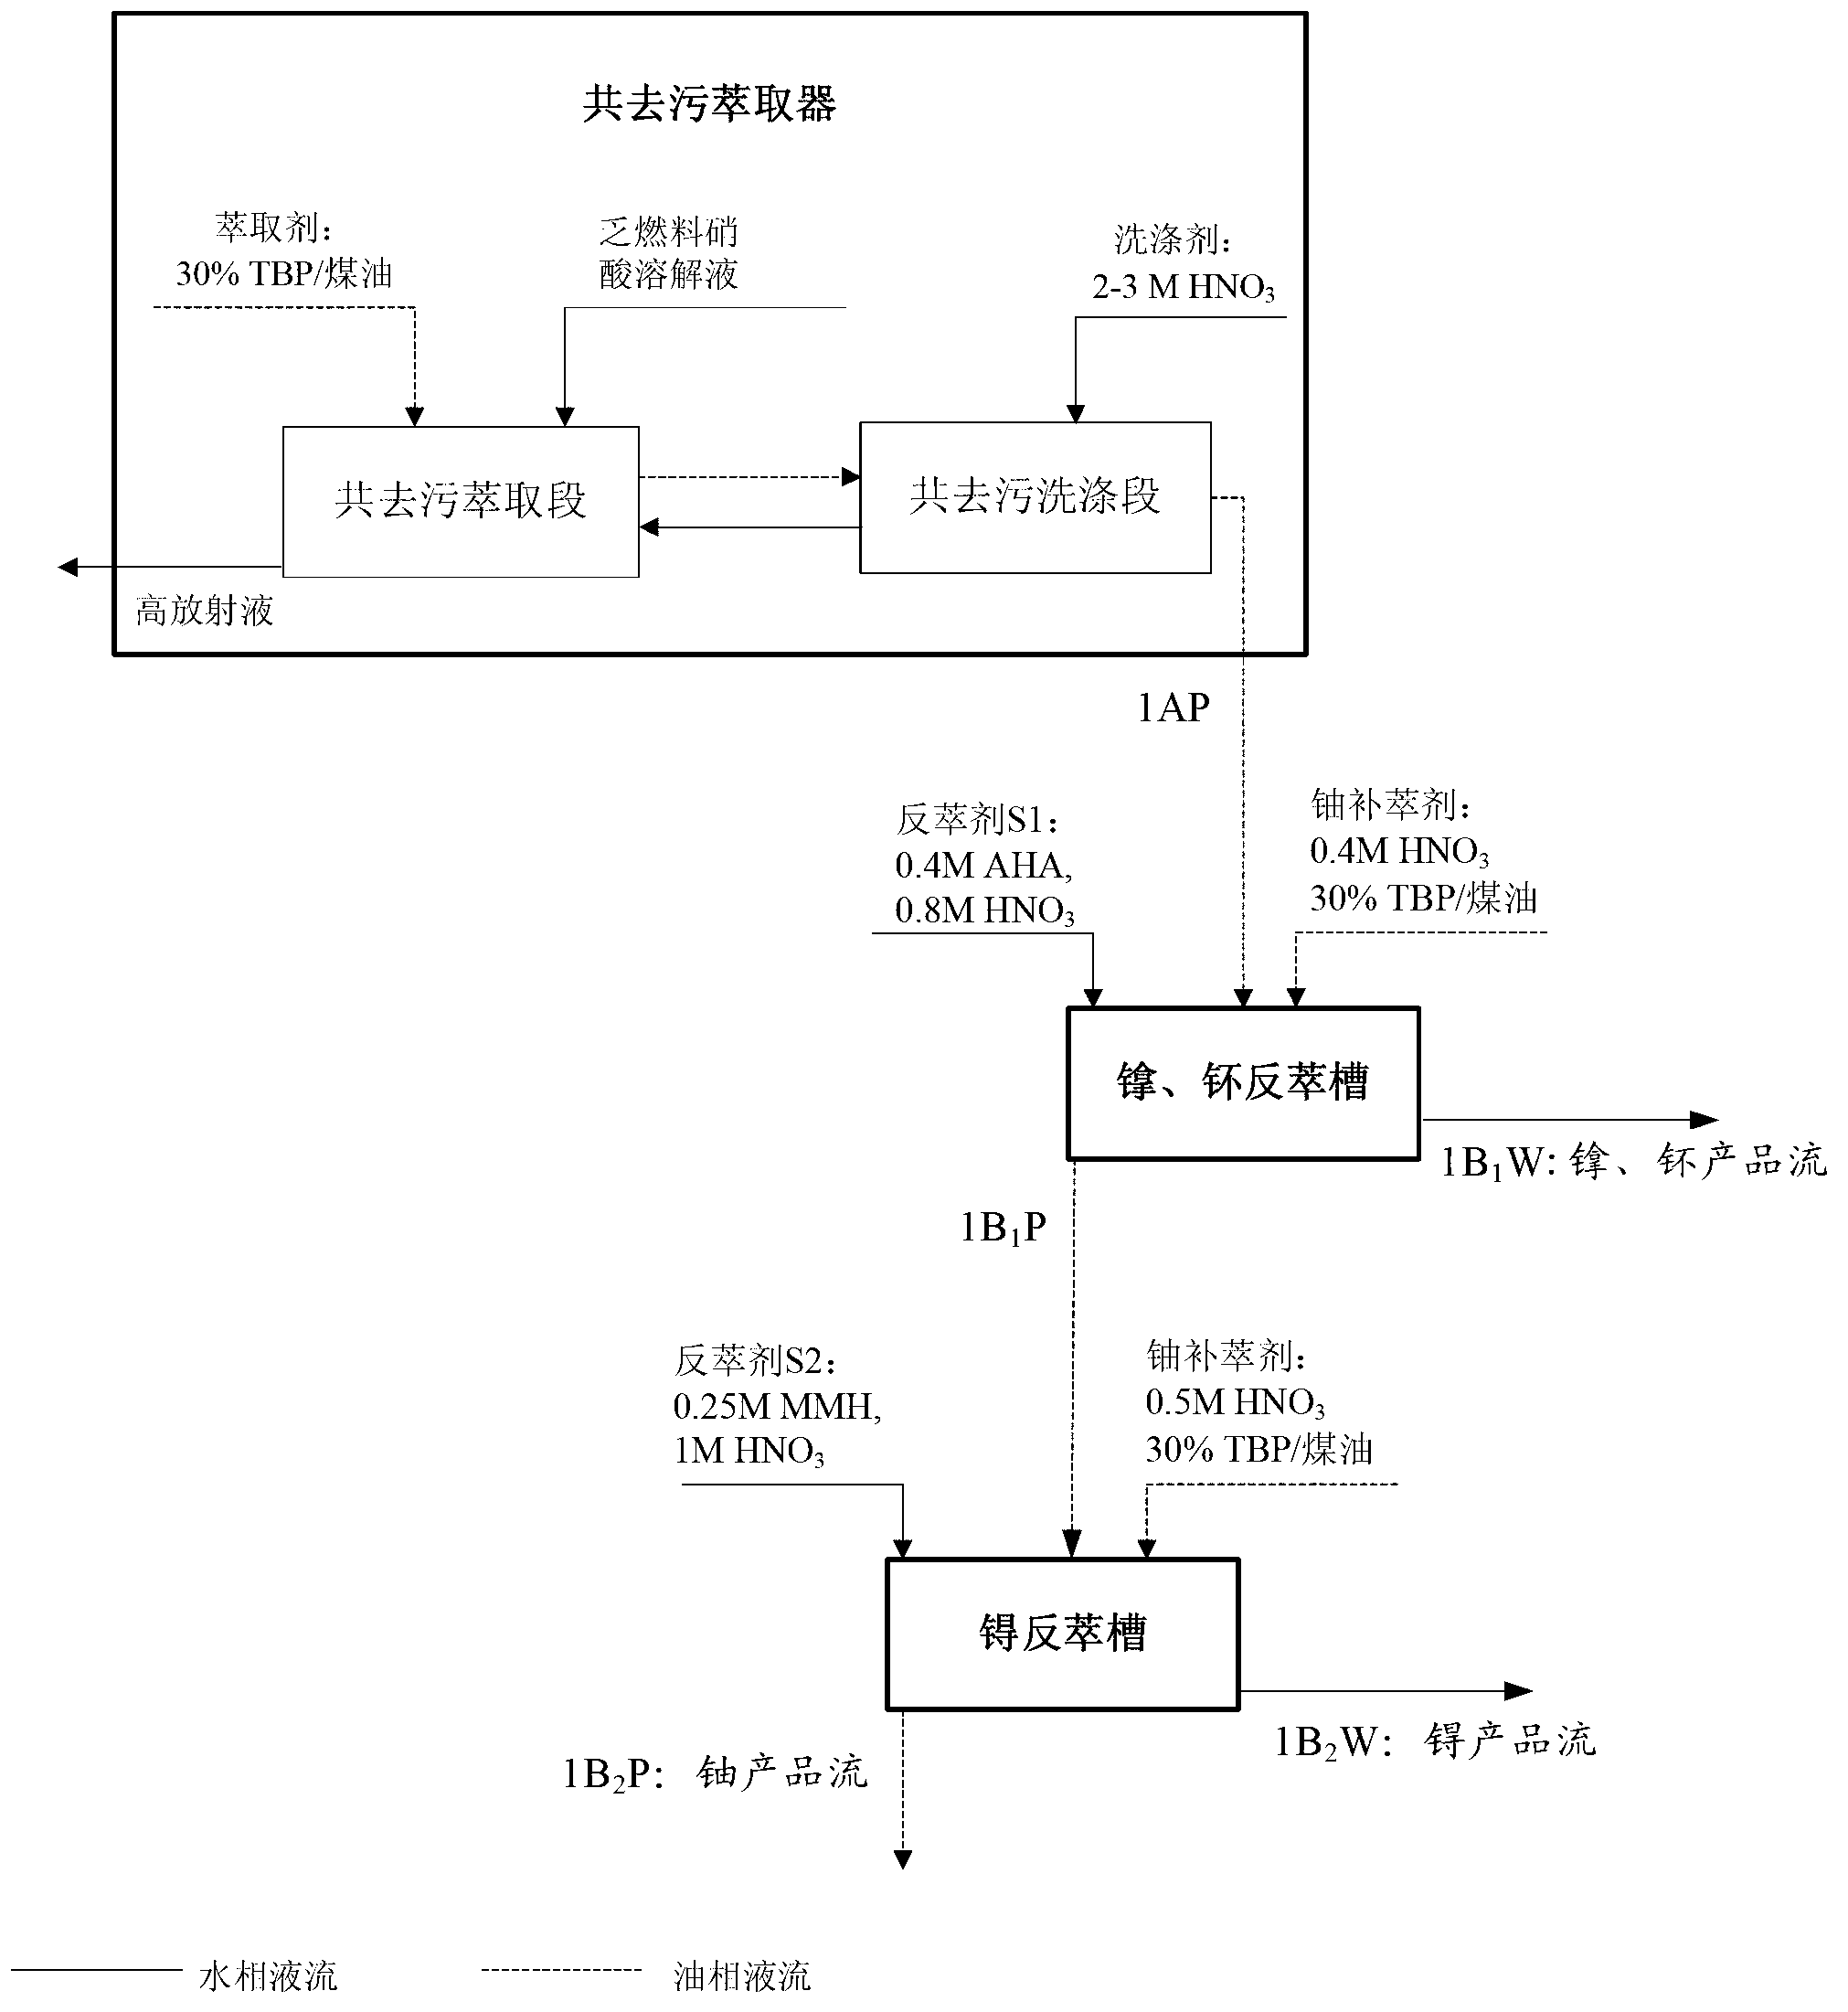 PUREX process for separating technetium